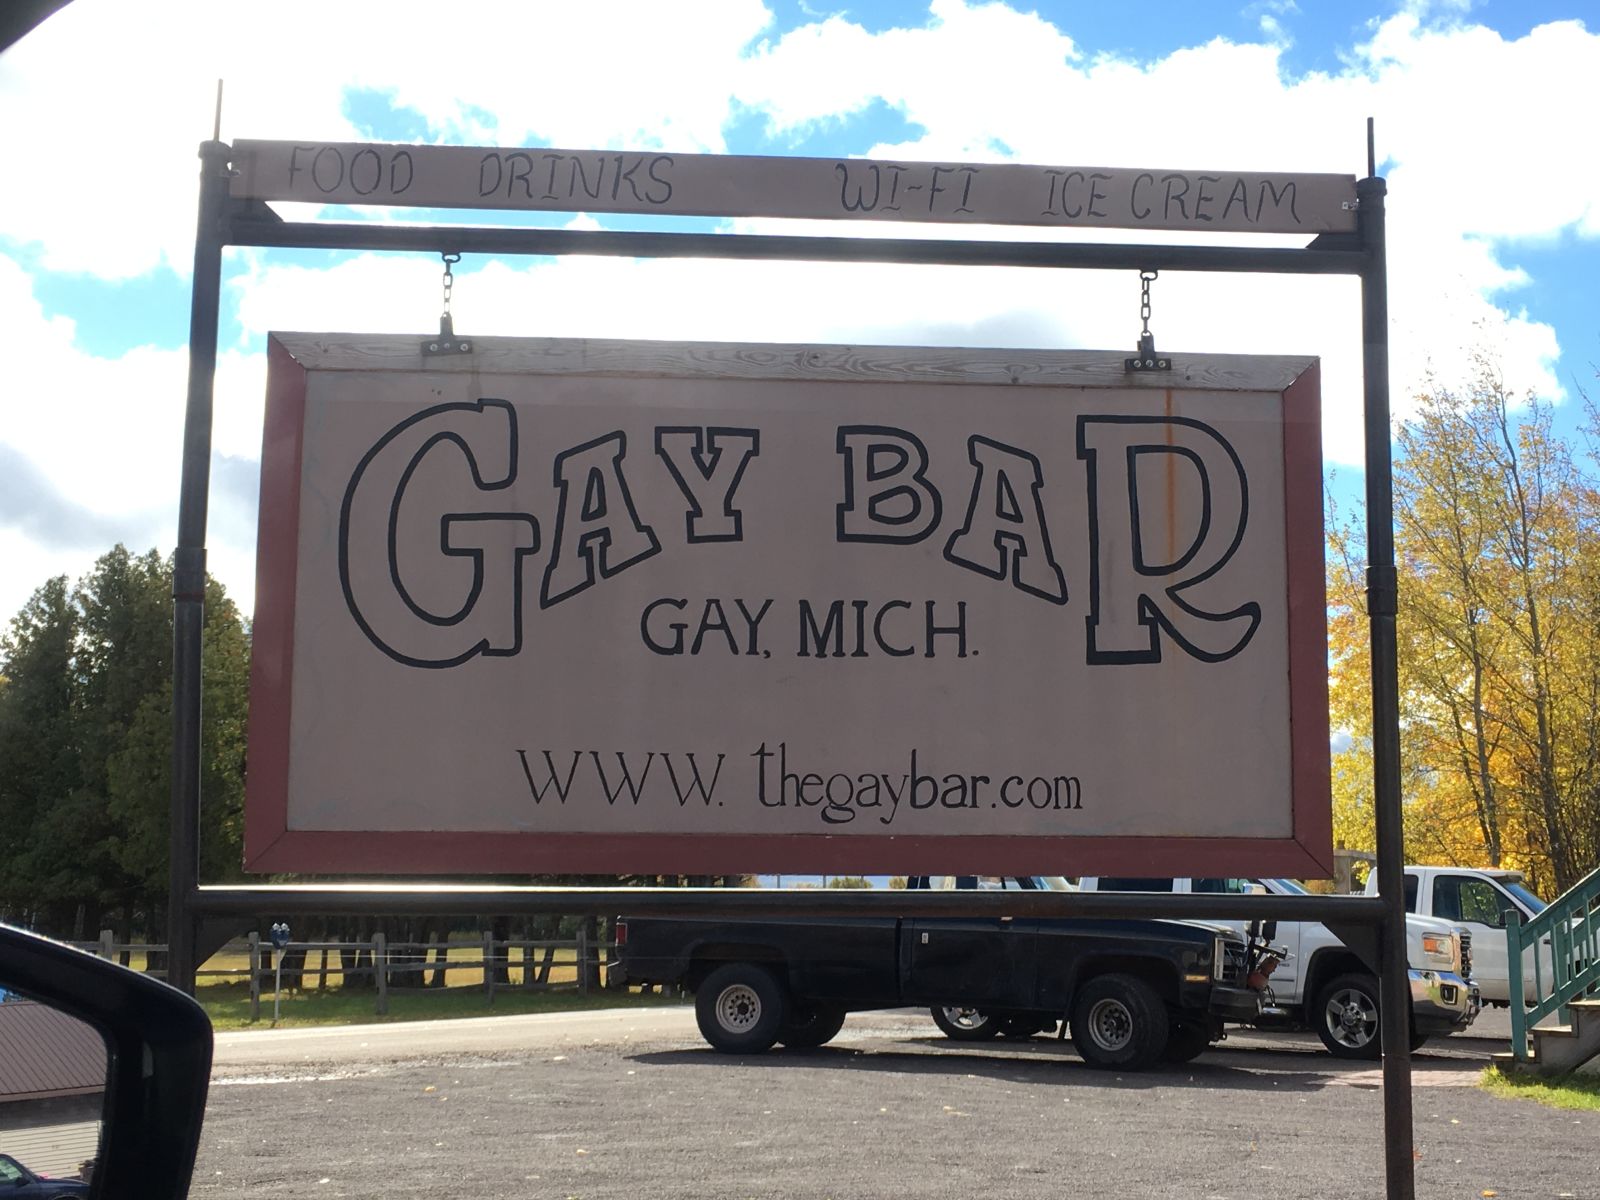 YOU! I WANNA TAKE YOU TO A GAY BAR! I WANNA TAKE YOU TO A GAY BAR GAY BAR GAY BAR!